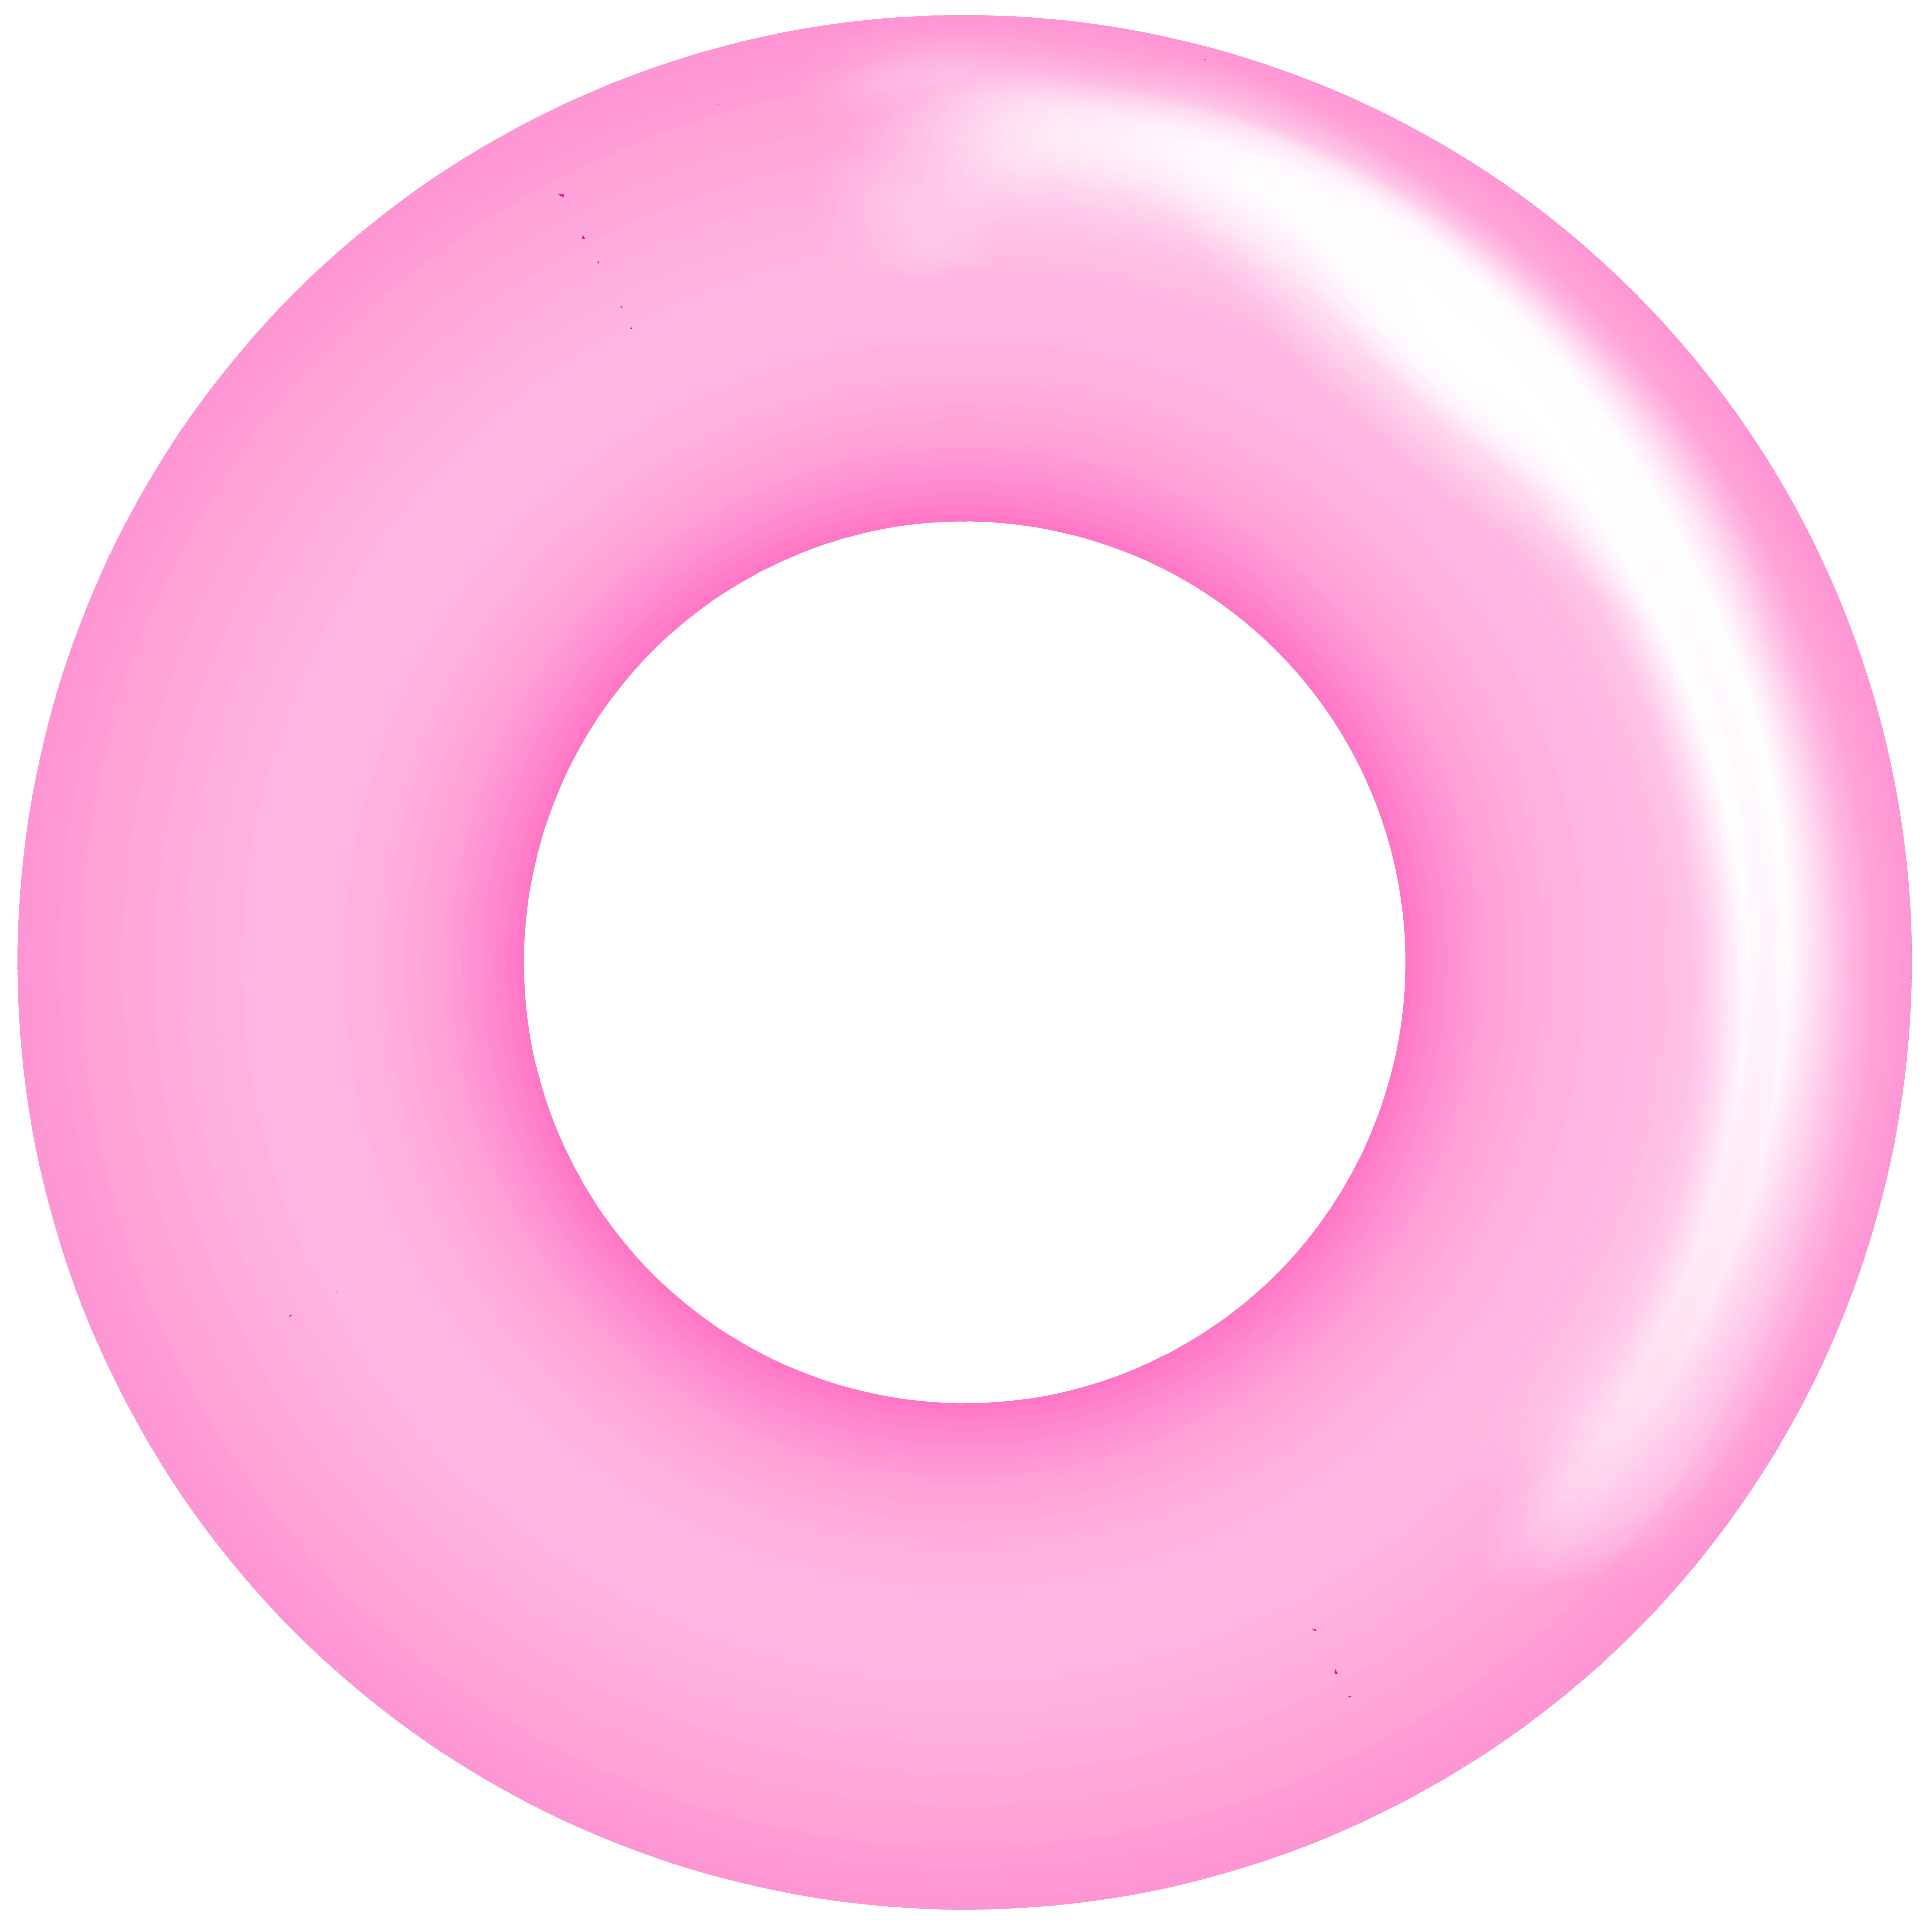 pink ring clip art